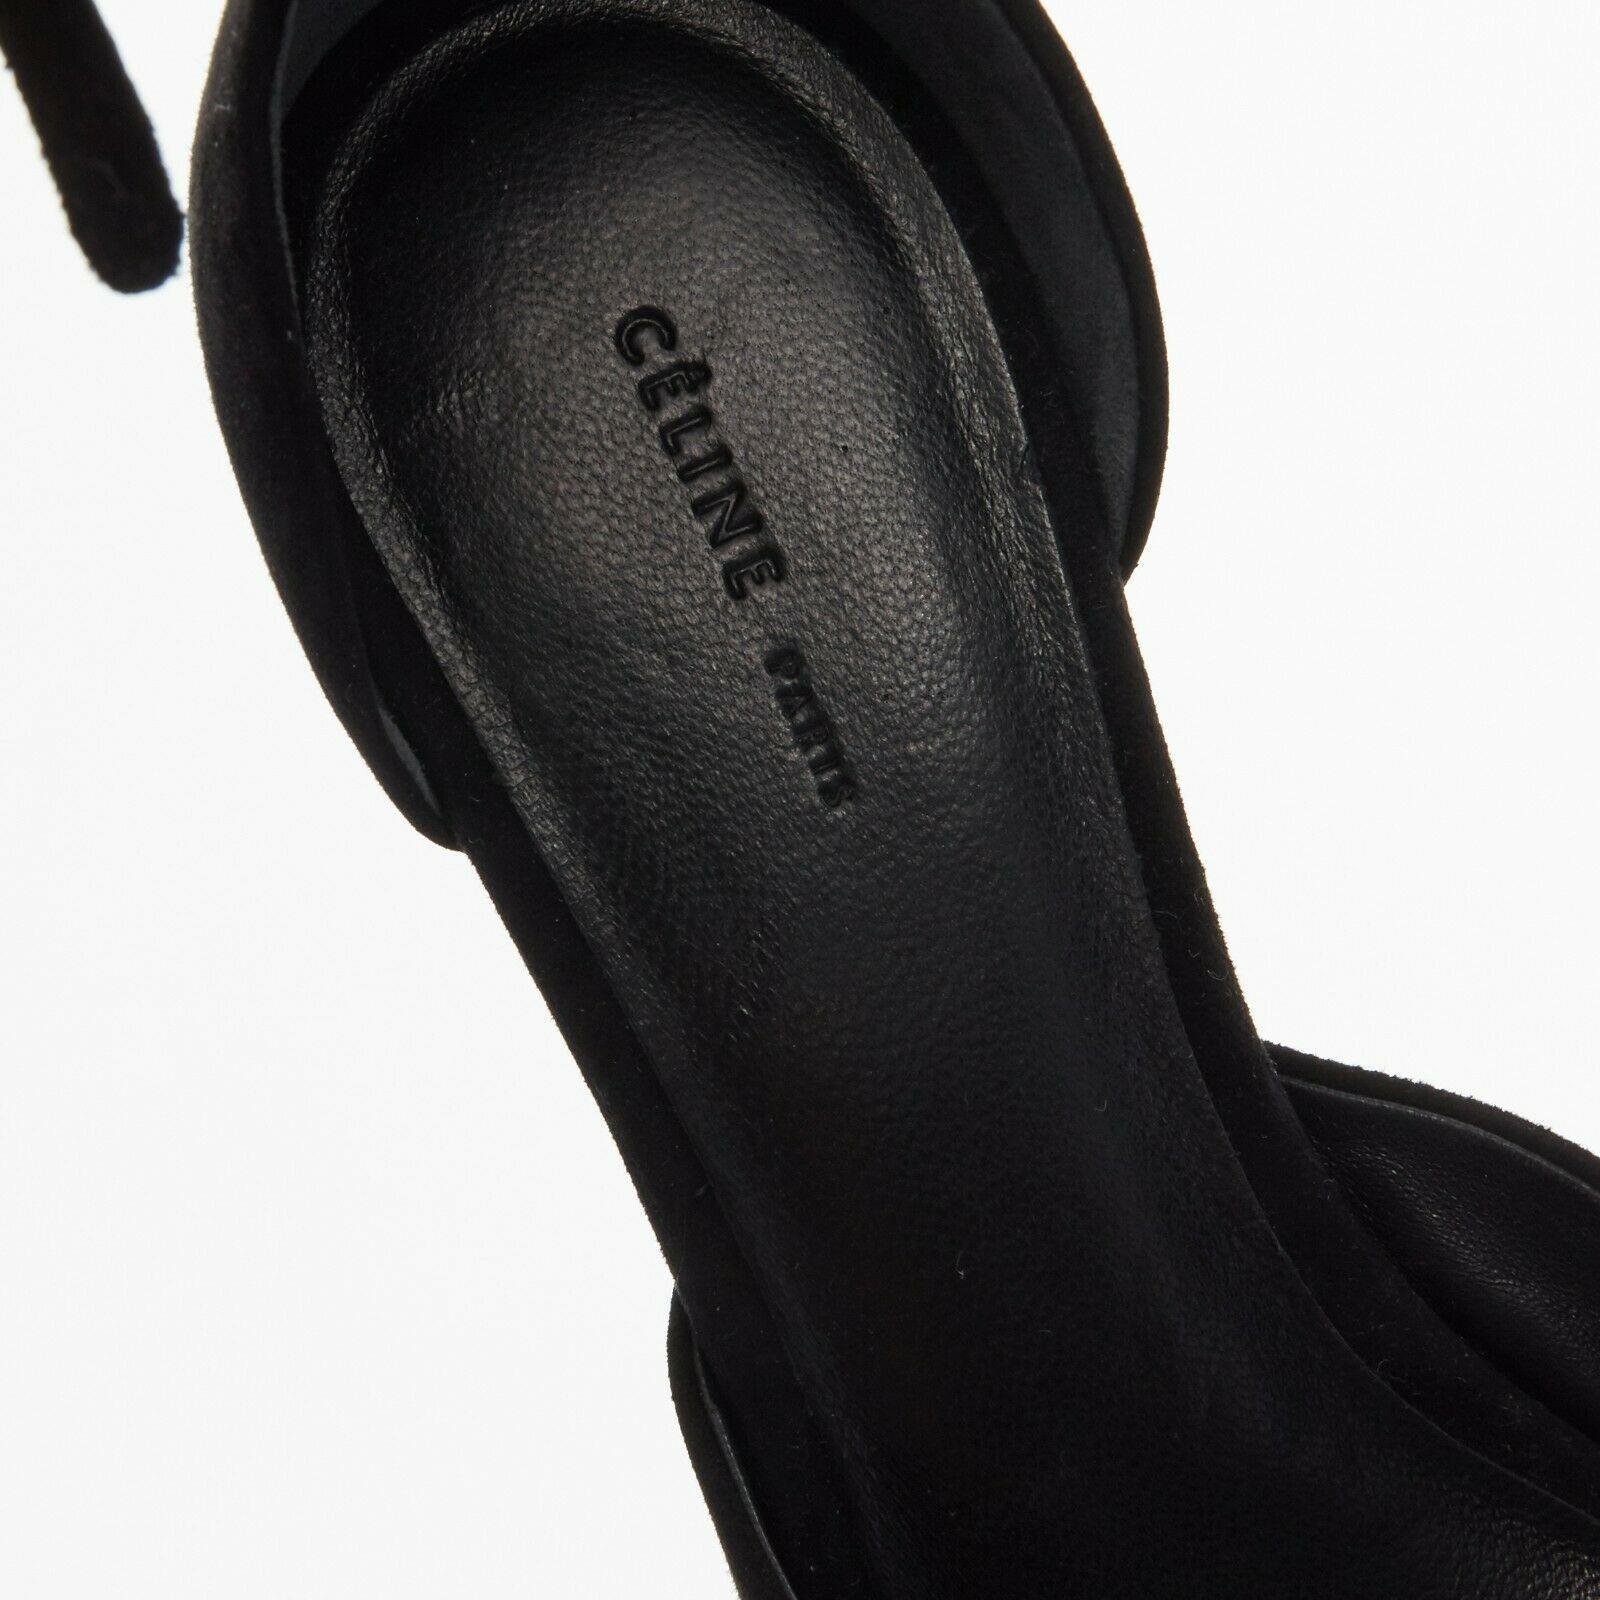 CELINE PHOEBE PHILO black suede cut out platform wedge ankle cuff heels EU36 3